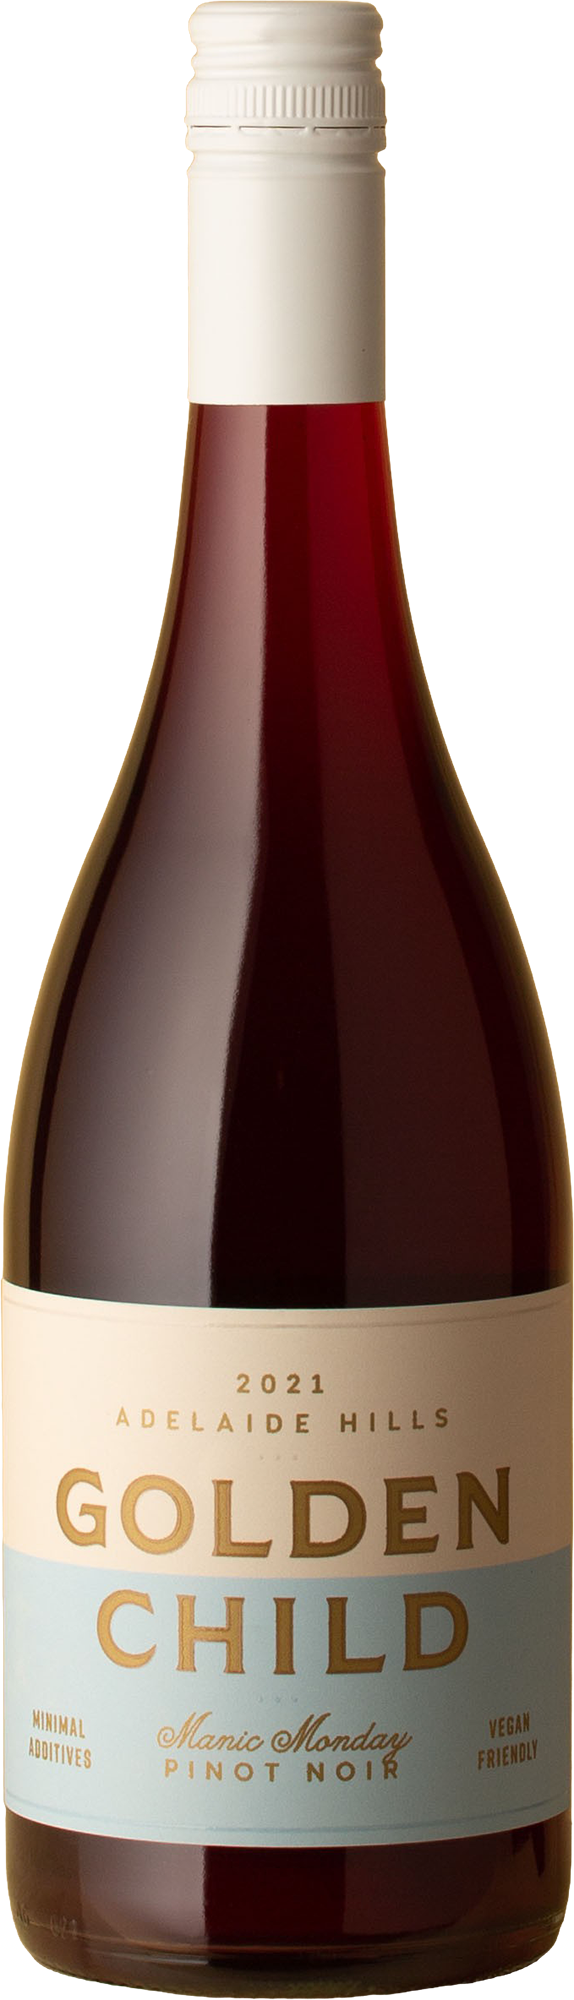 Golden Child - Manic Monday Pinot Noir 2021 Red Wine